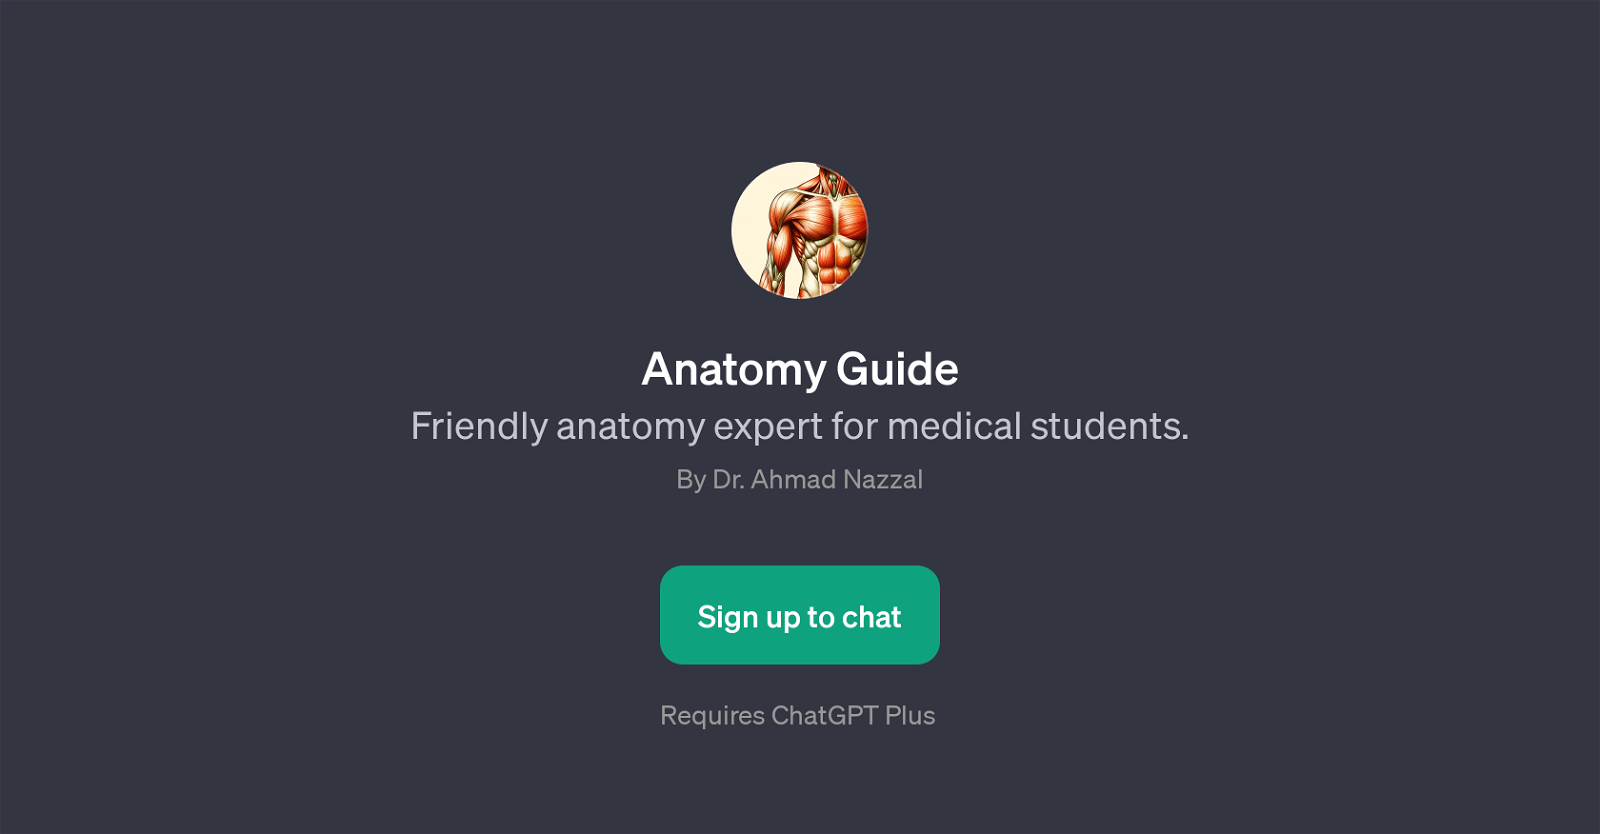 Anatomy Guide website